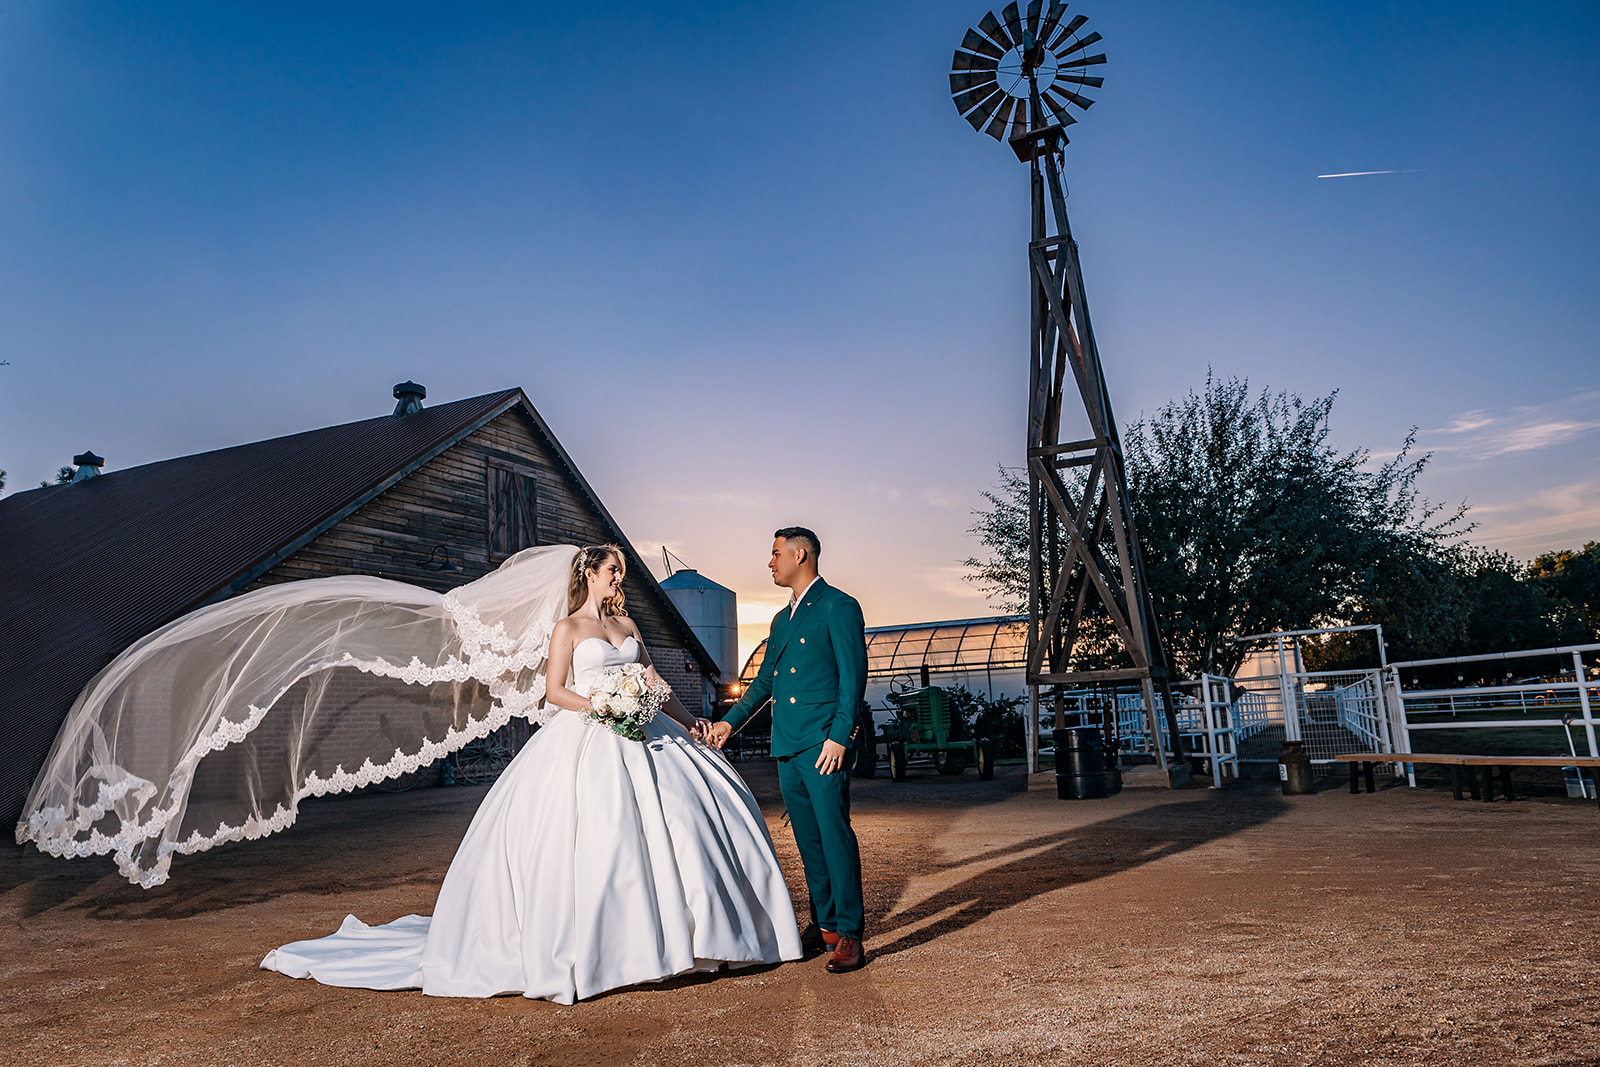 Mexican Wedding at Knotty Barn, Queen Creek, AZ